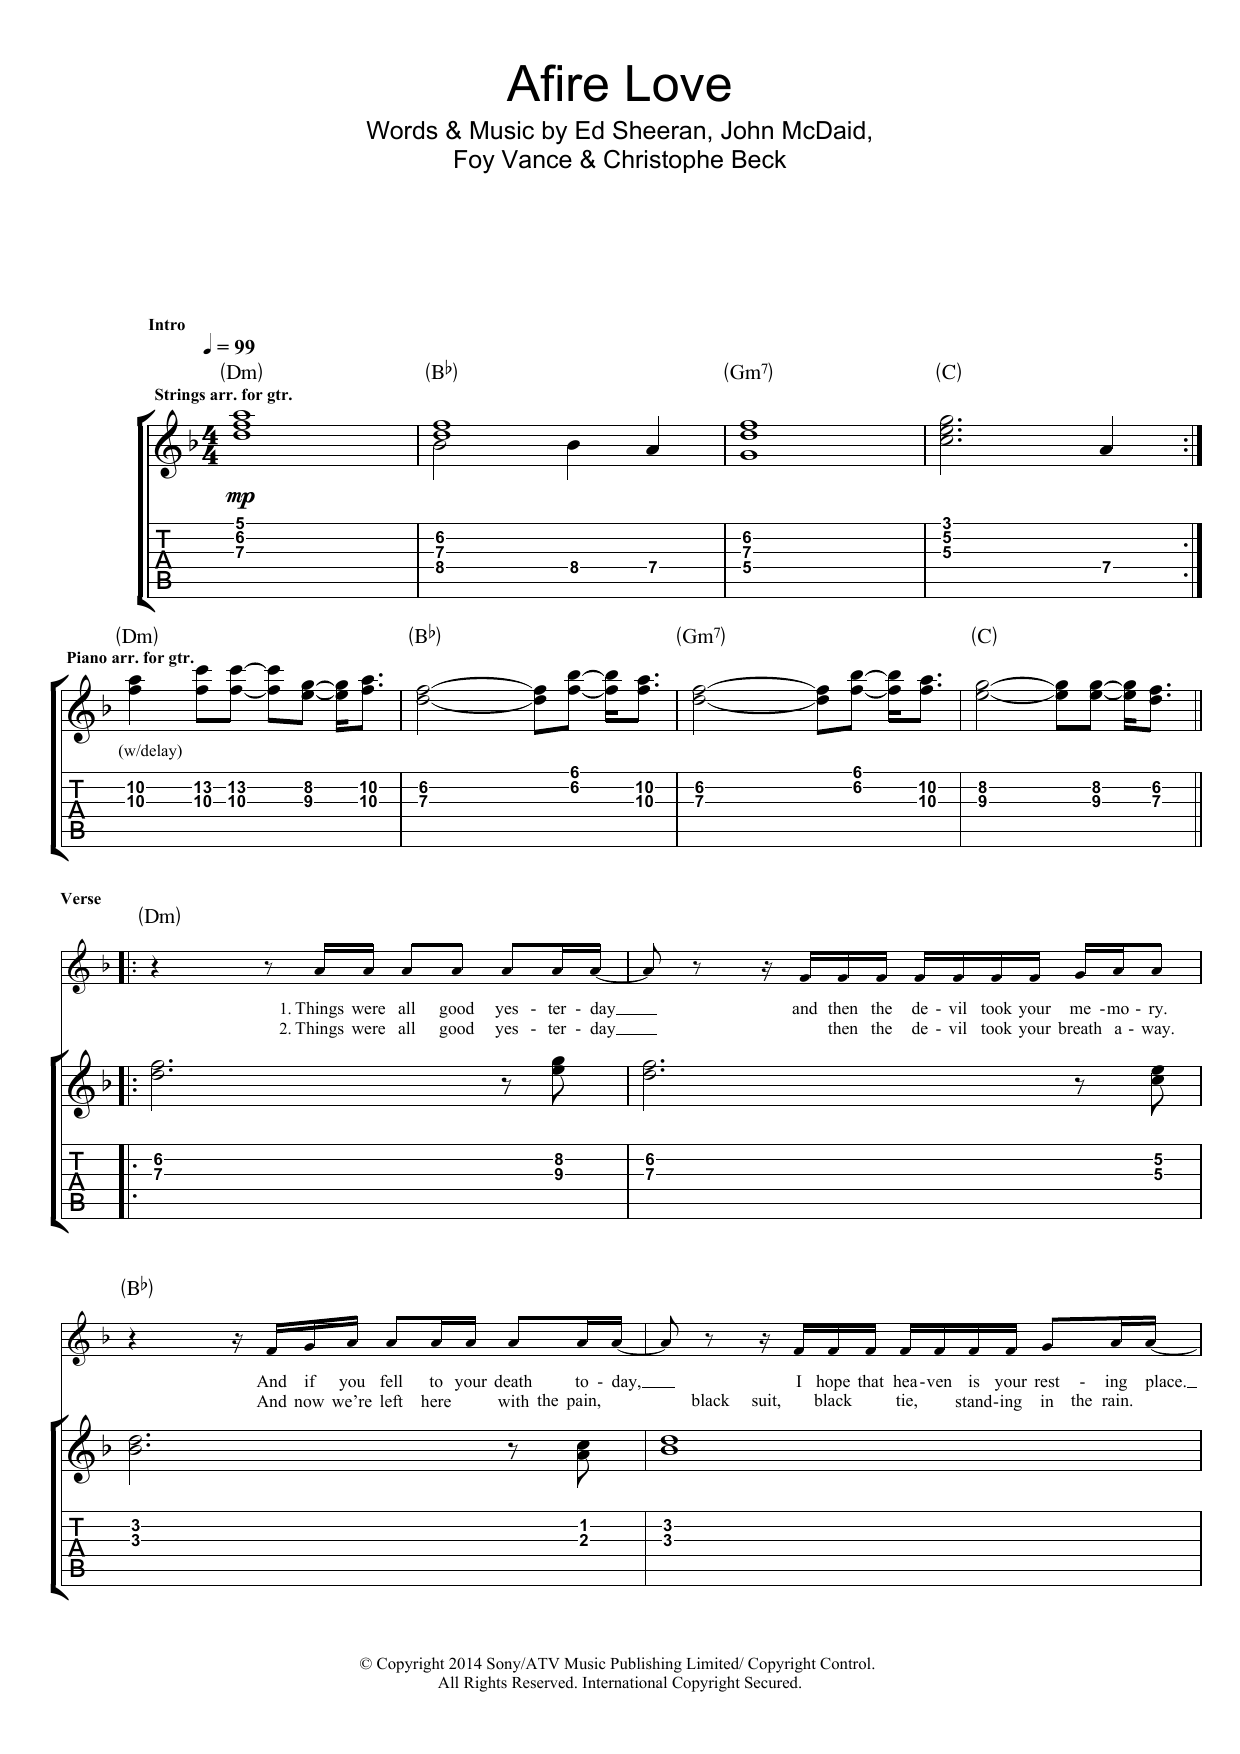 Ed Sheeran Afire Love Sheet Music Notes & Chords for Guitar Tab - Download or Print PDF